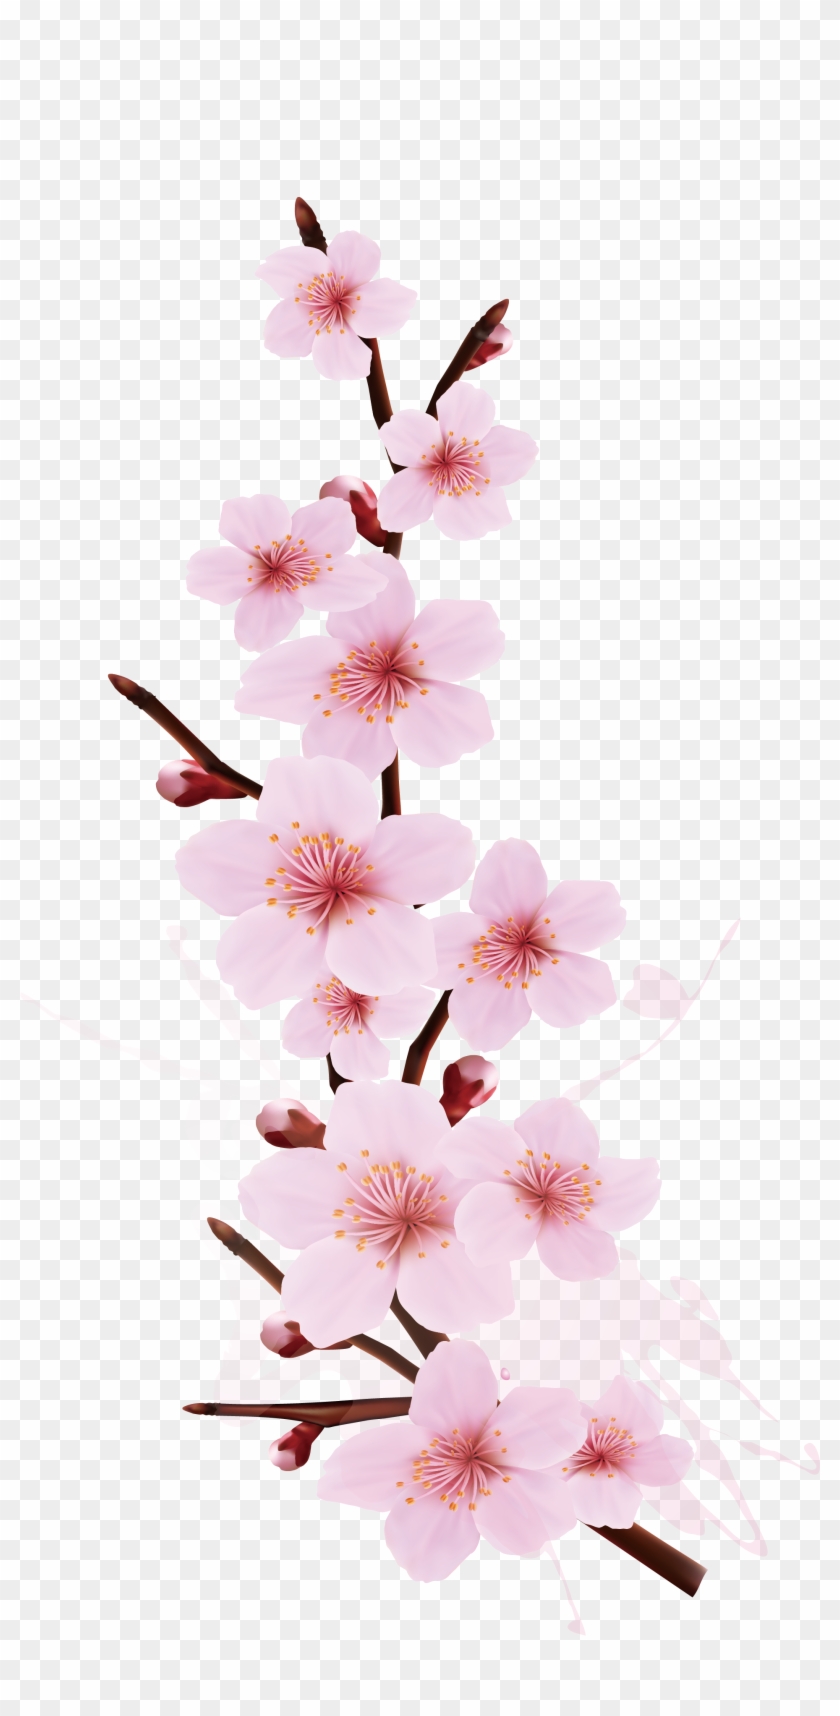 Cherry Blossom Branch Tree Smudge Splash Cherry Design - Cherry Blossom Branch Tree Smudge Splash Cherry Design #272489